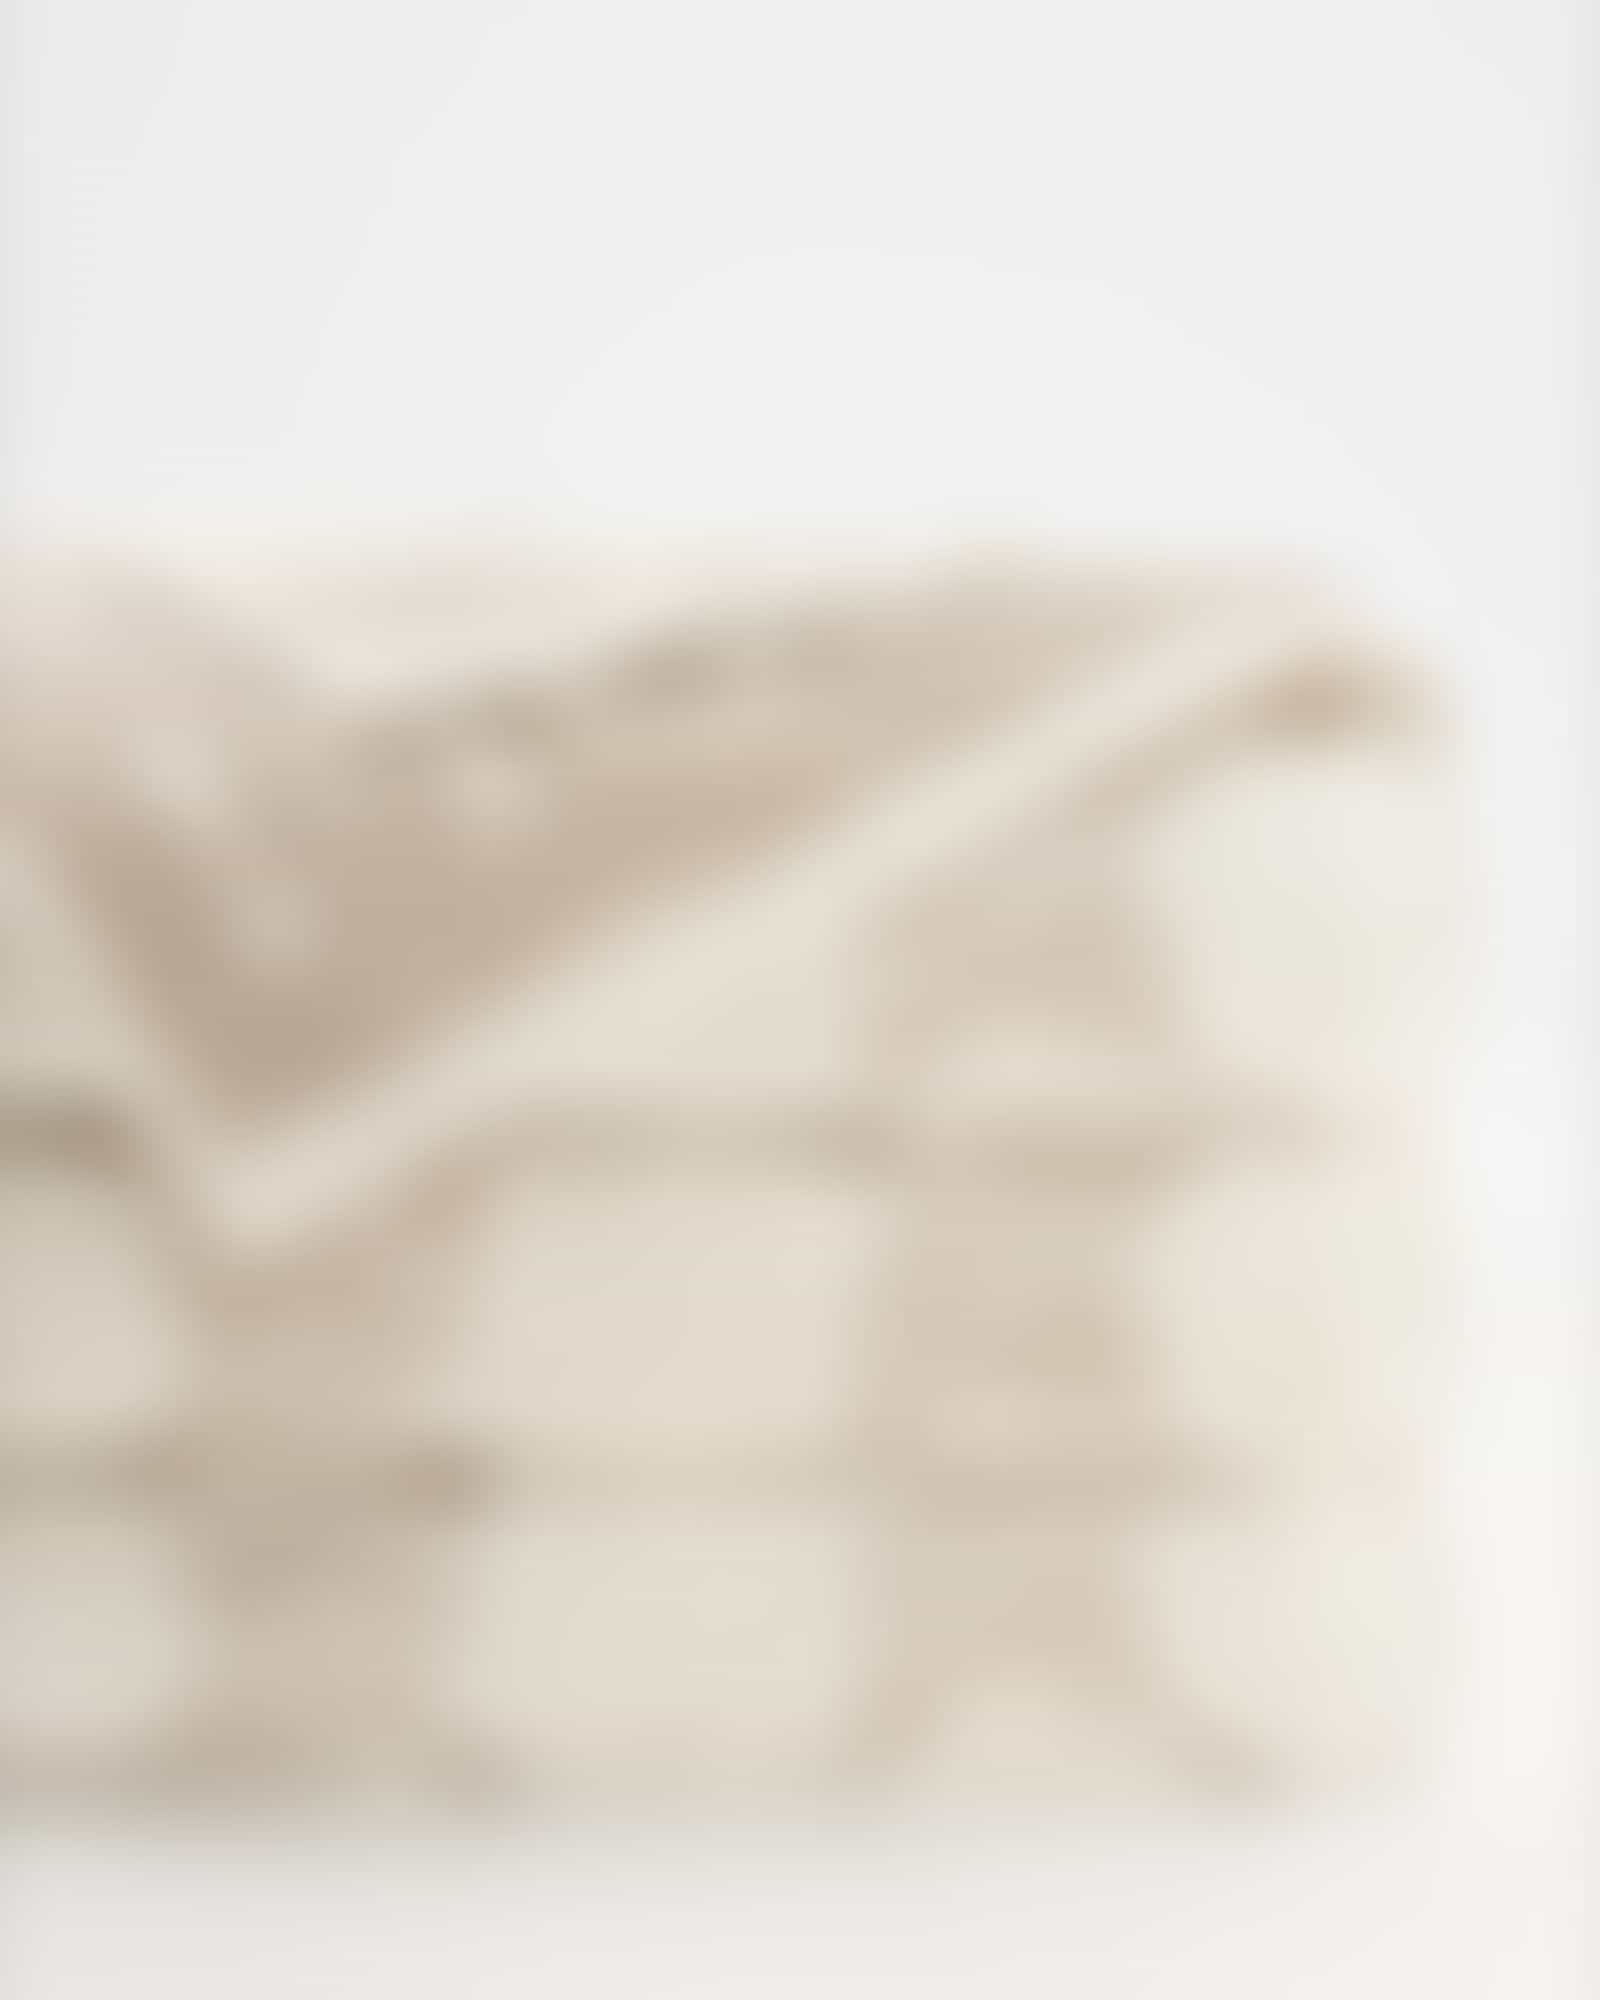 JOOP! Classic - Cornflower 1611 - Farbe: Creme - 36 - Saunatuch 80x200 cm Detailbild 2